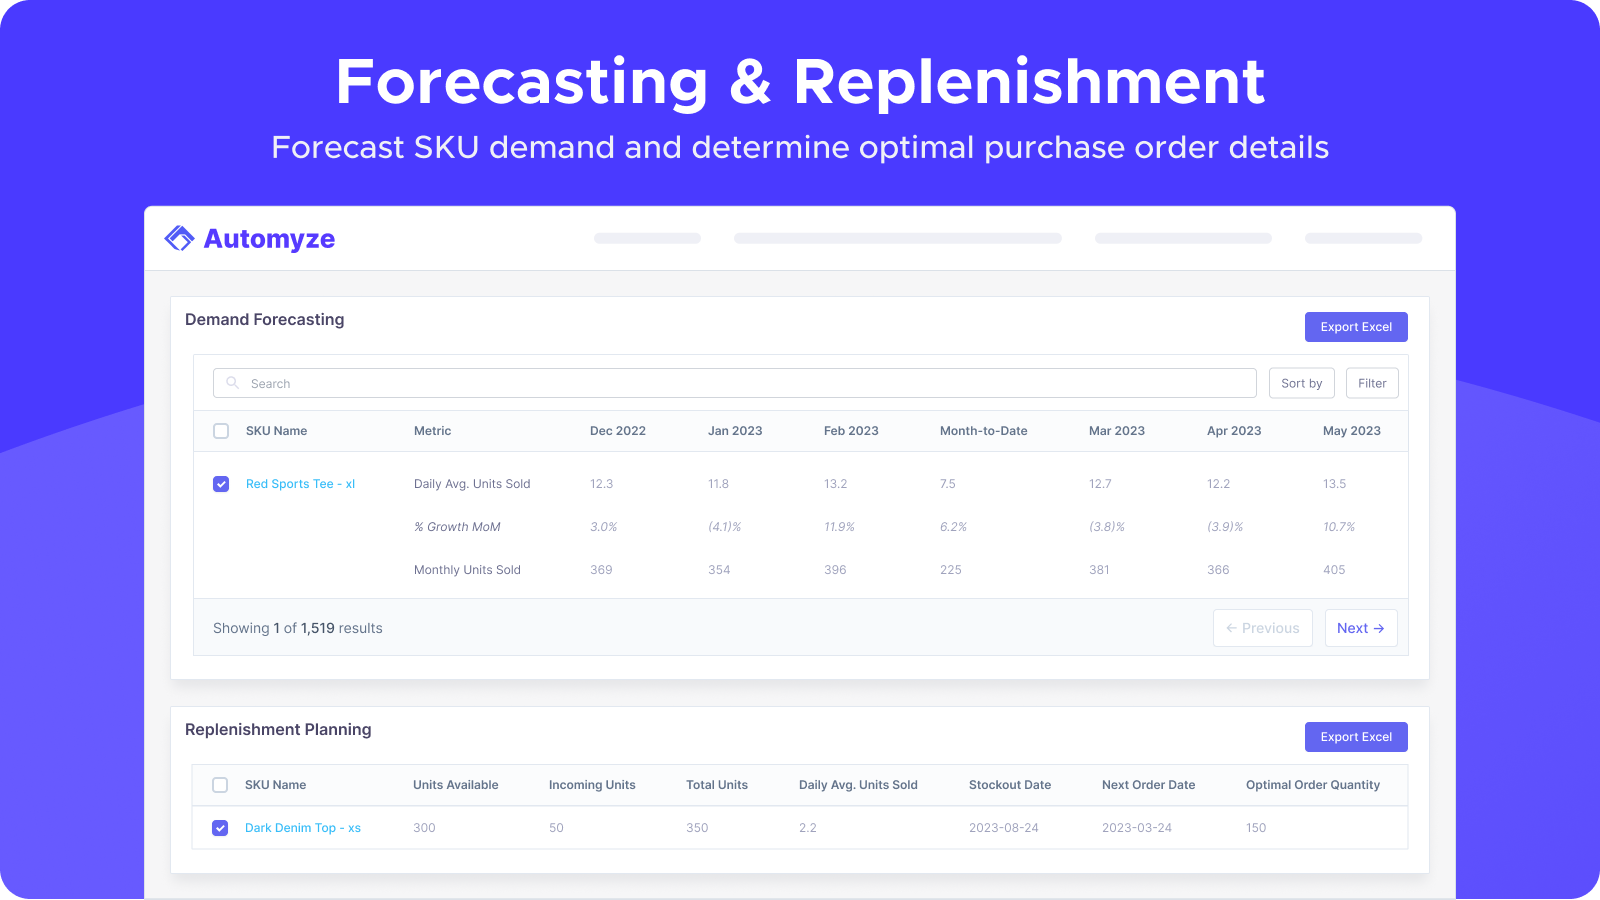 Forecast SKU demand and determine optimal purchase order details